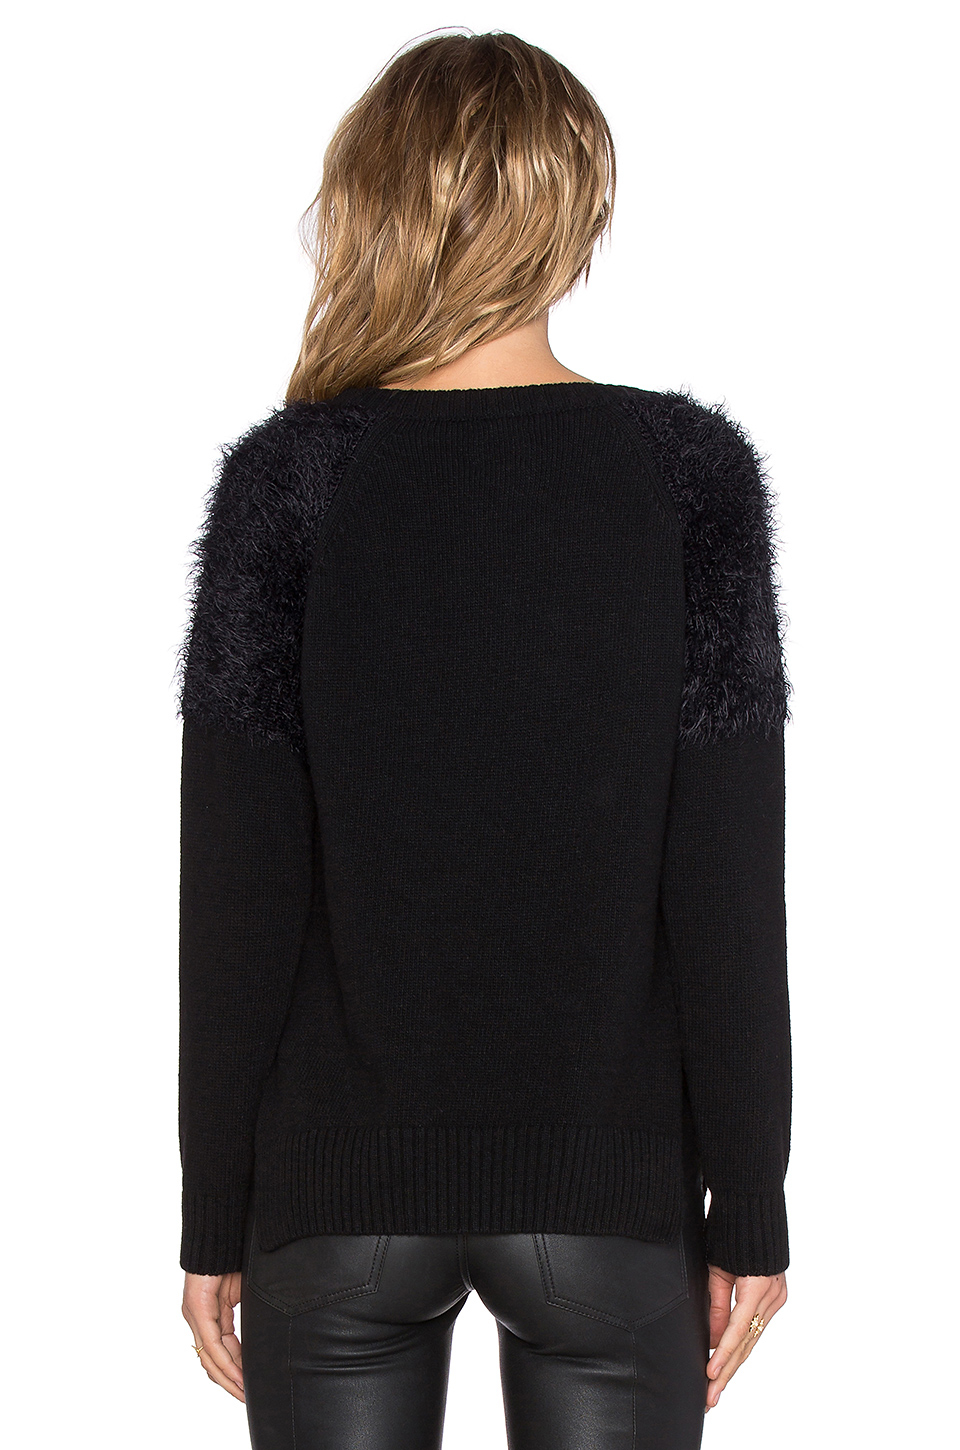 Lyst - Anine Bing Fluffy Shoulder Sweater in Black